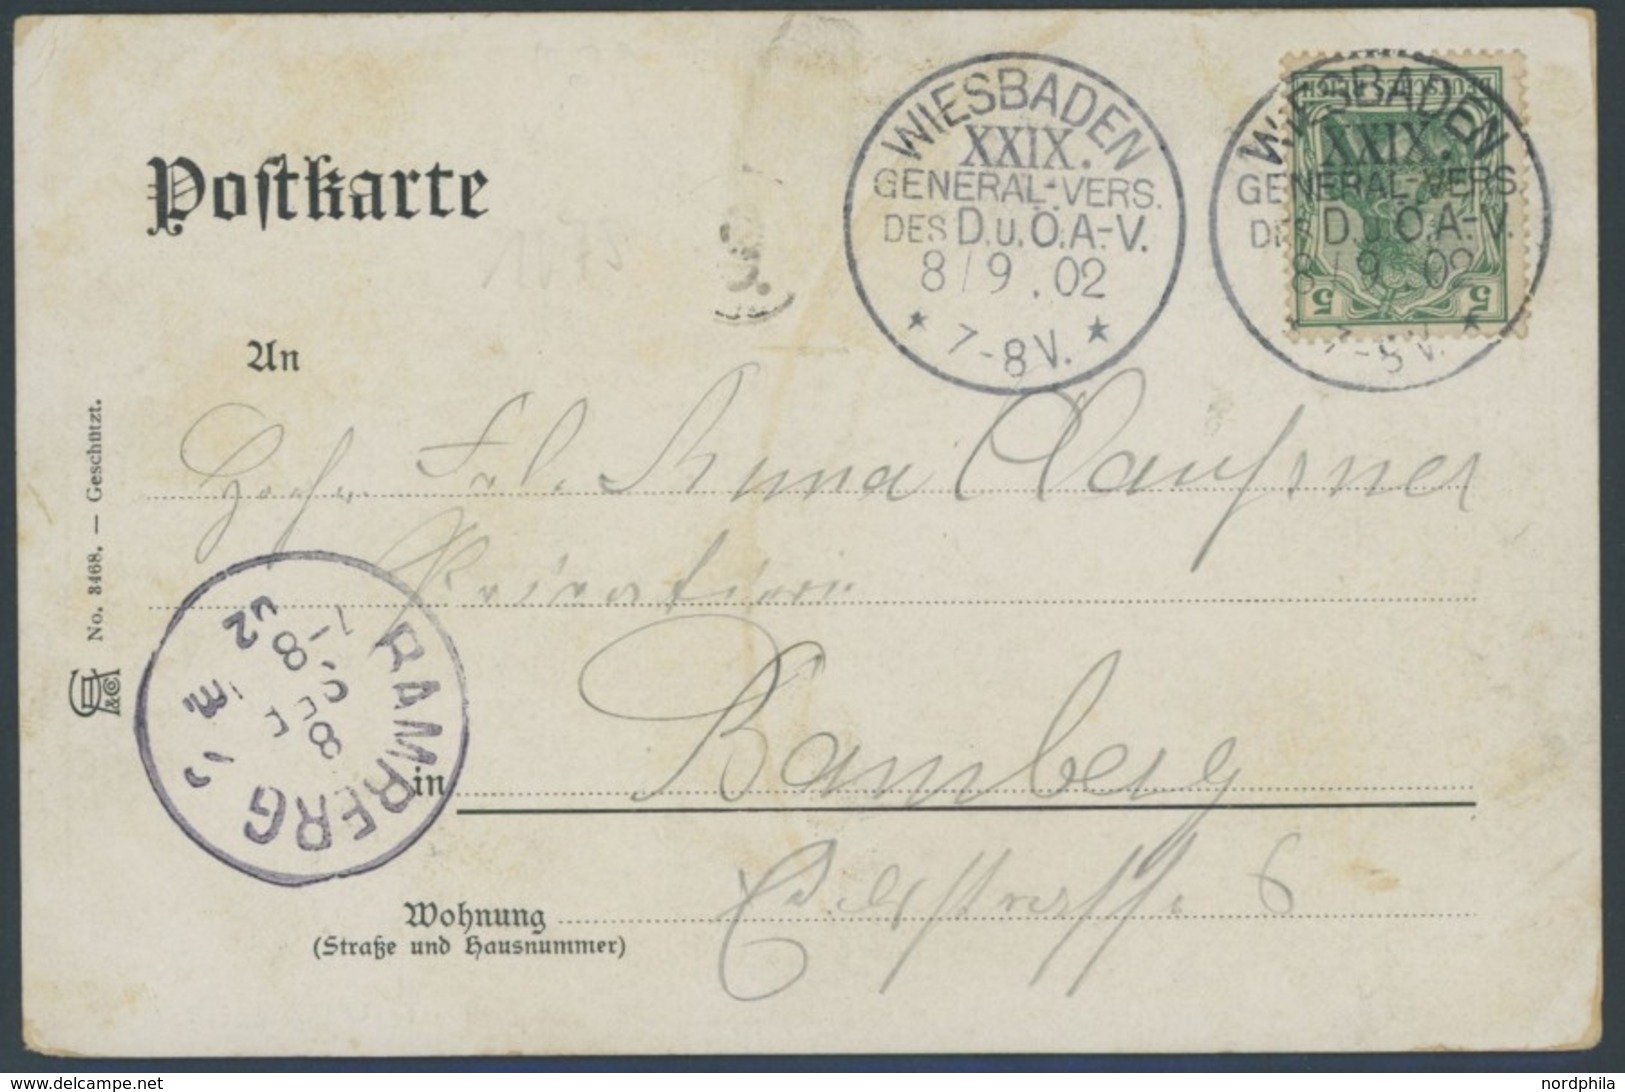 SST Bis 1918 04 BRIEF, WIESBADEN XXIX. GENERAL-VERS. DES D.u.Ö.A.-V., 8.9.1902, Auf Festtagskarte, Feinst - Covers & Documents